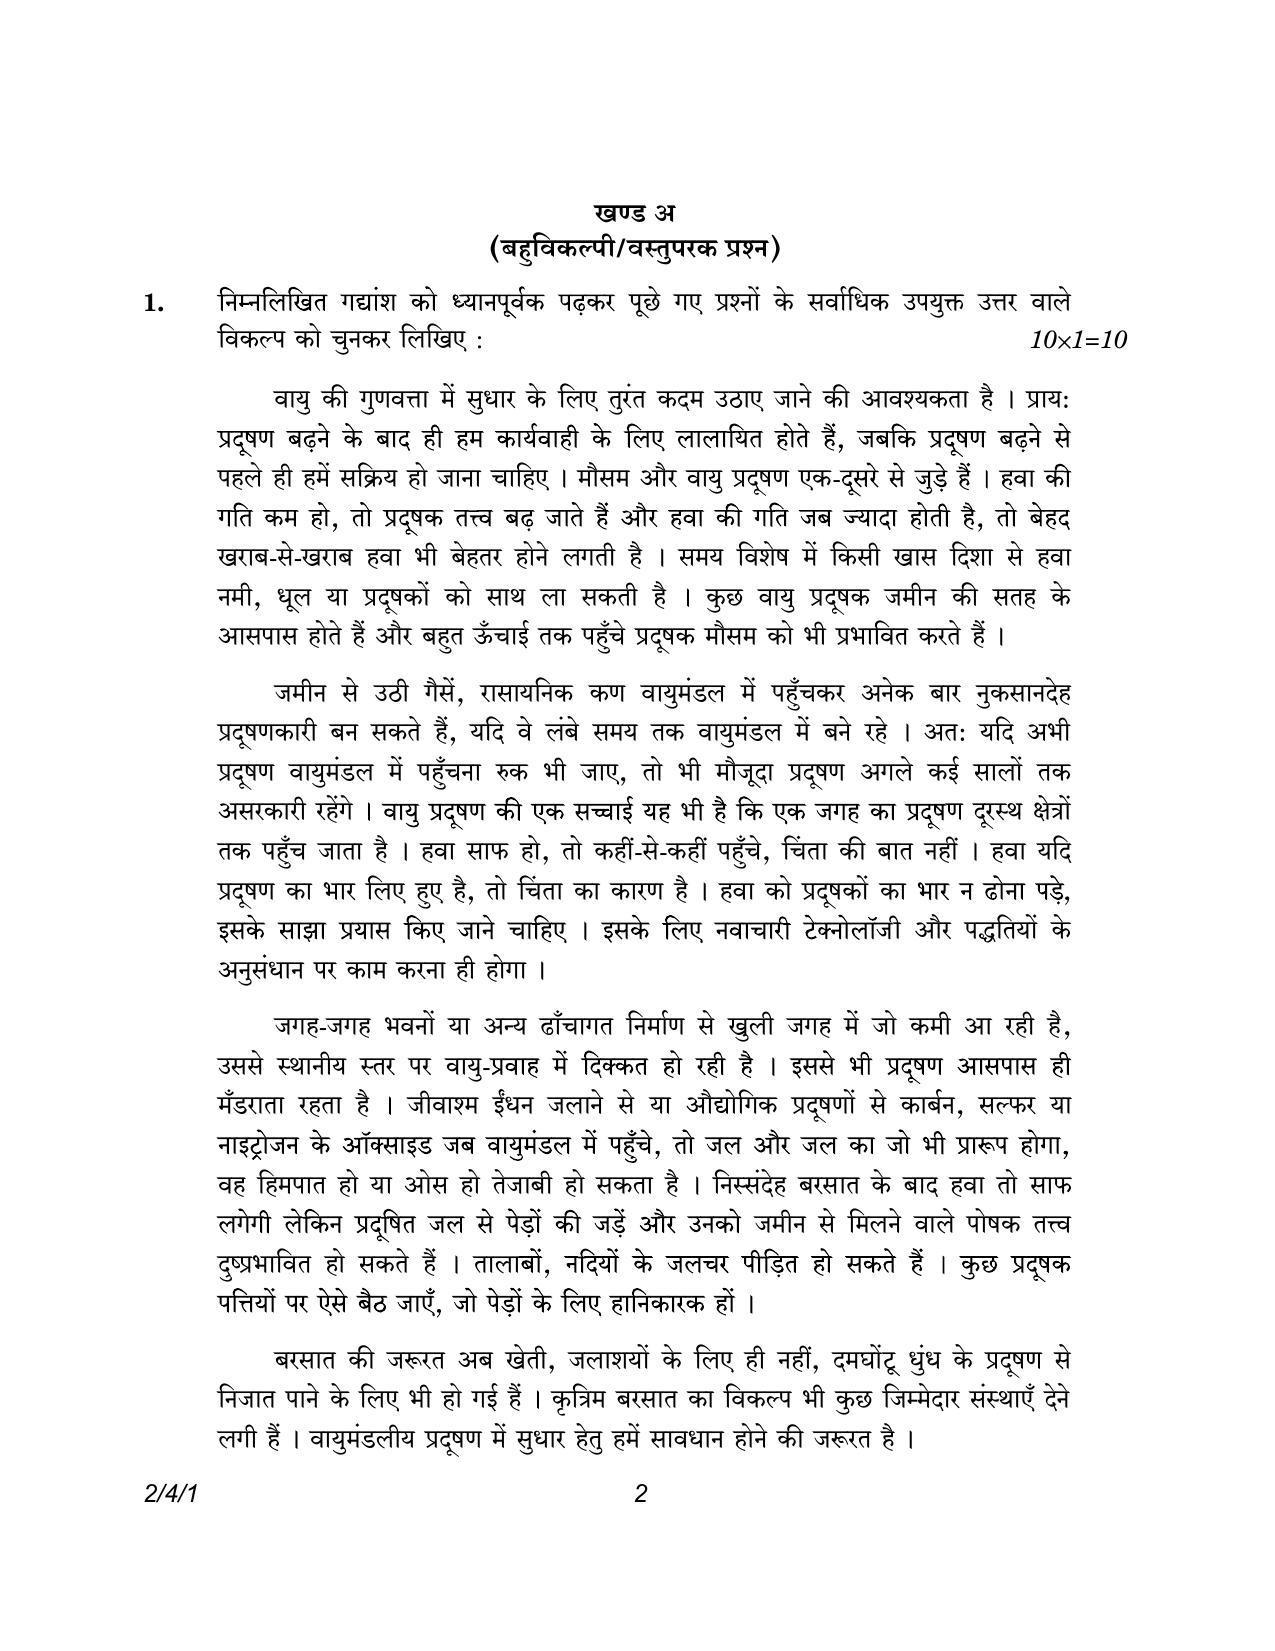 CBSE Class 12 2-4-1 Hindi Core version 2023 Question Paper - Page 2